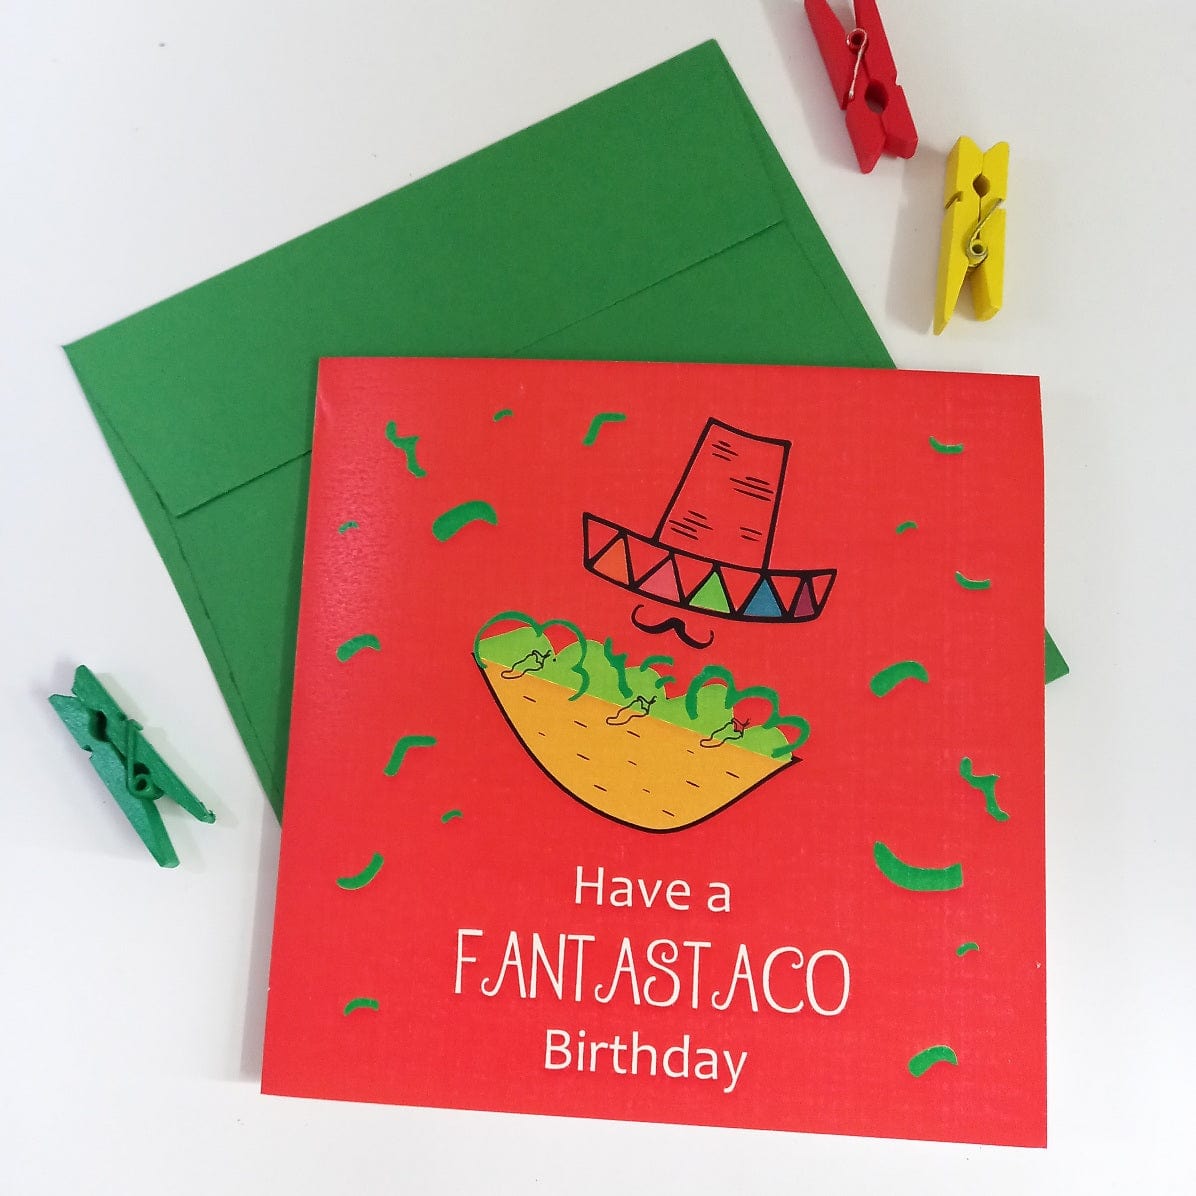 Fantastaco Birthday | Greeting Card